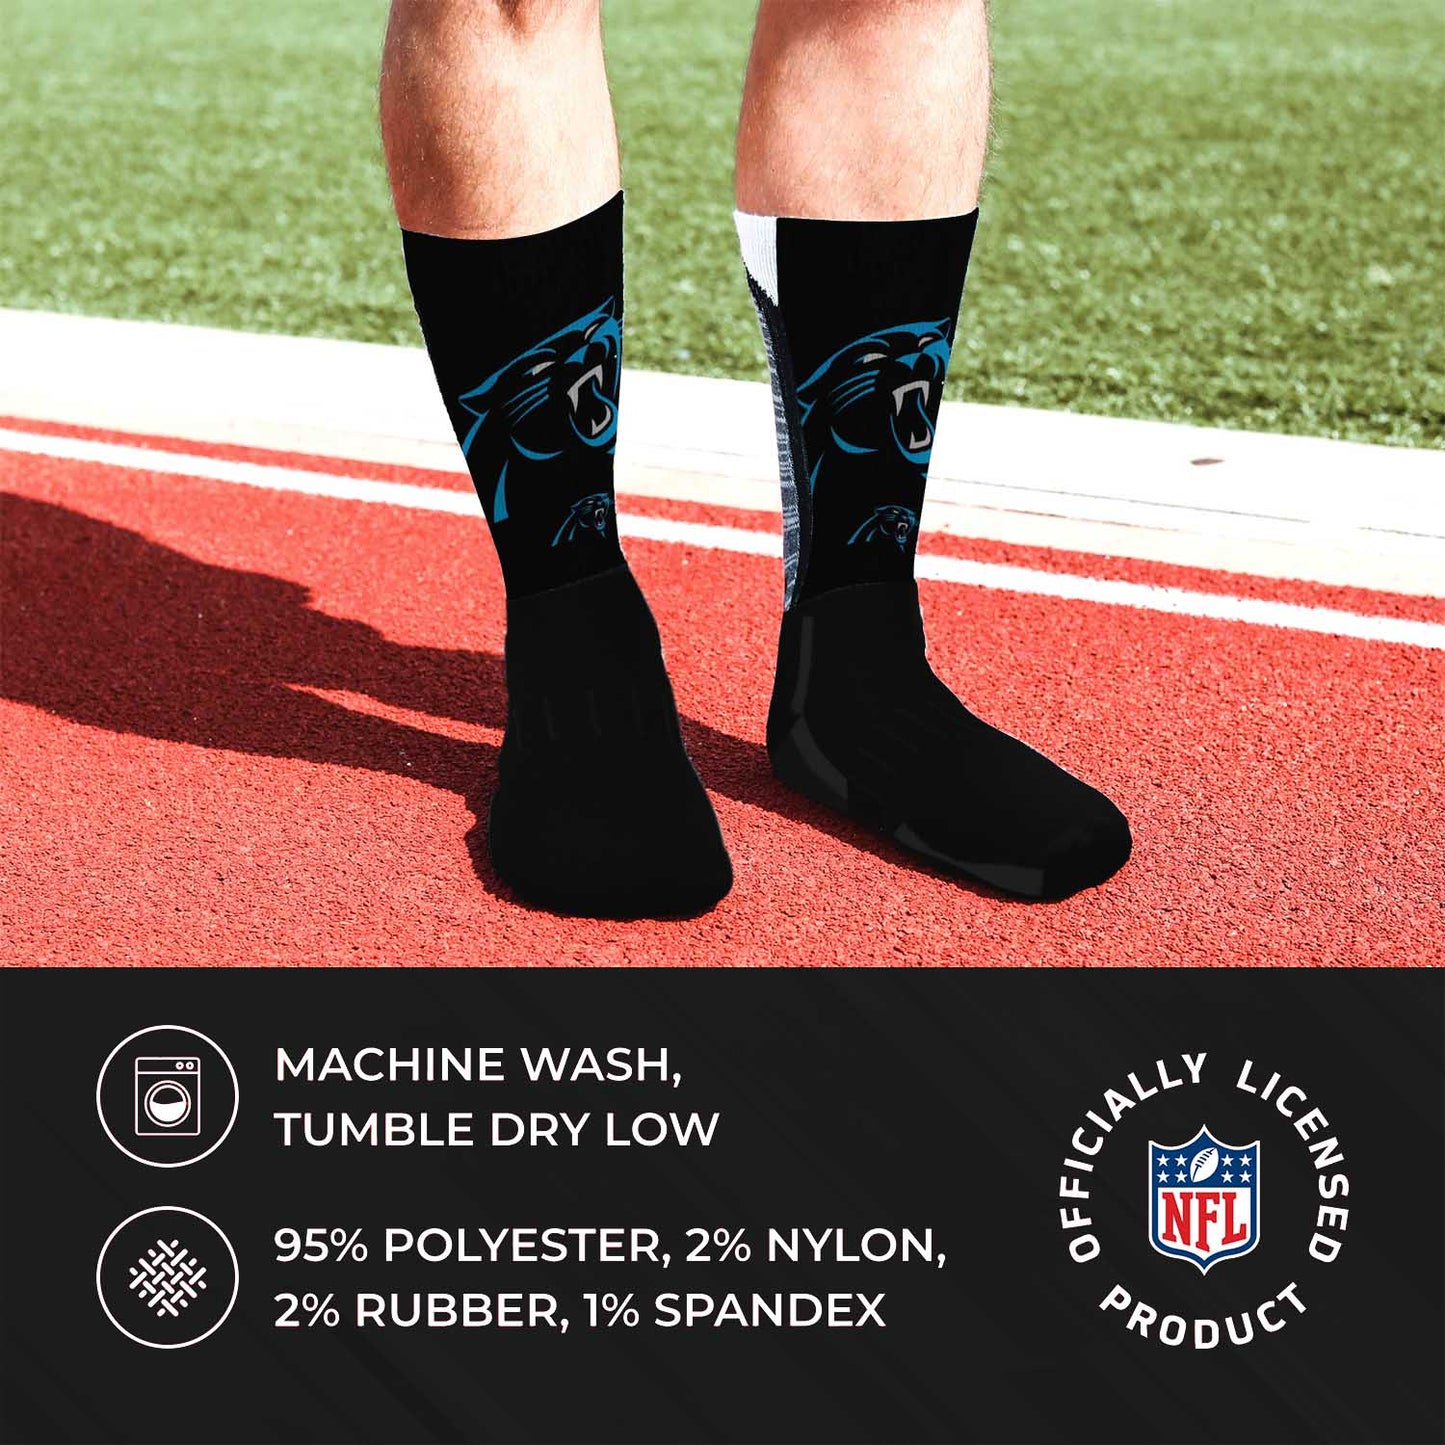 Carolina Panthers NFL Adult Curve Socks - Light Blue